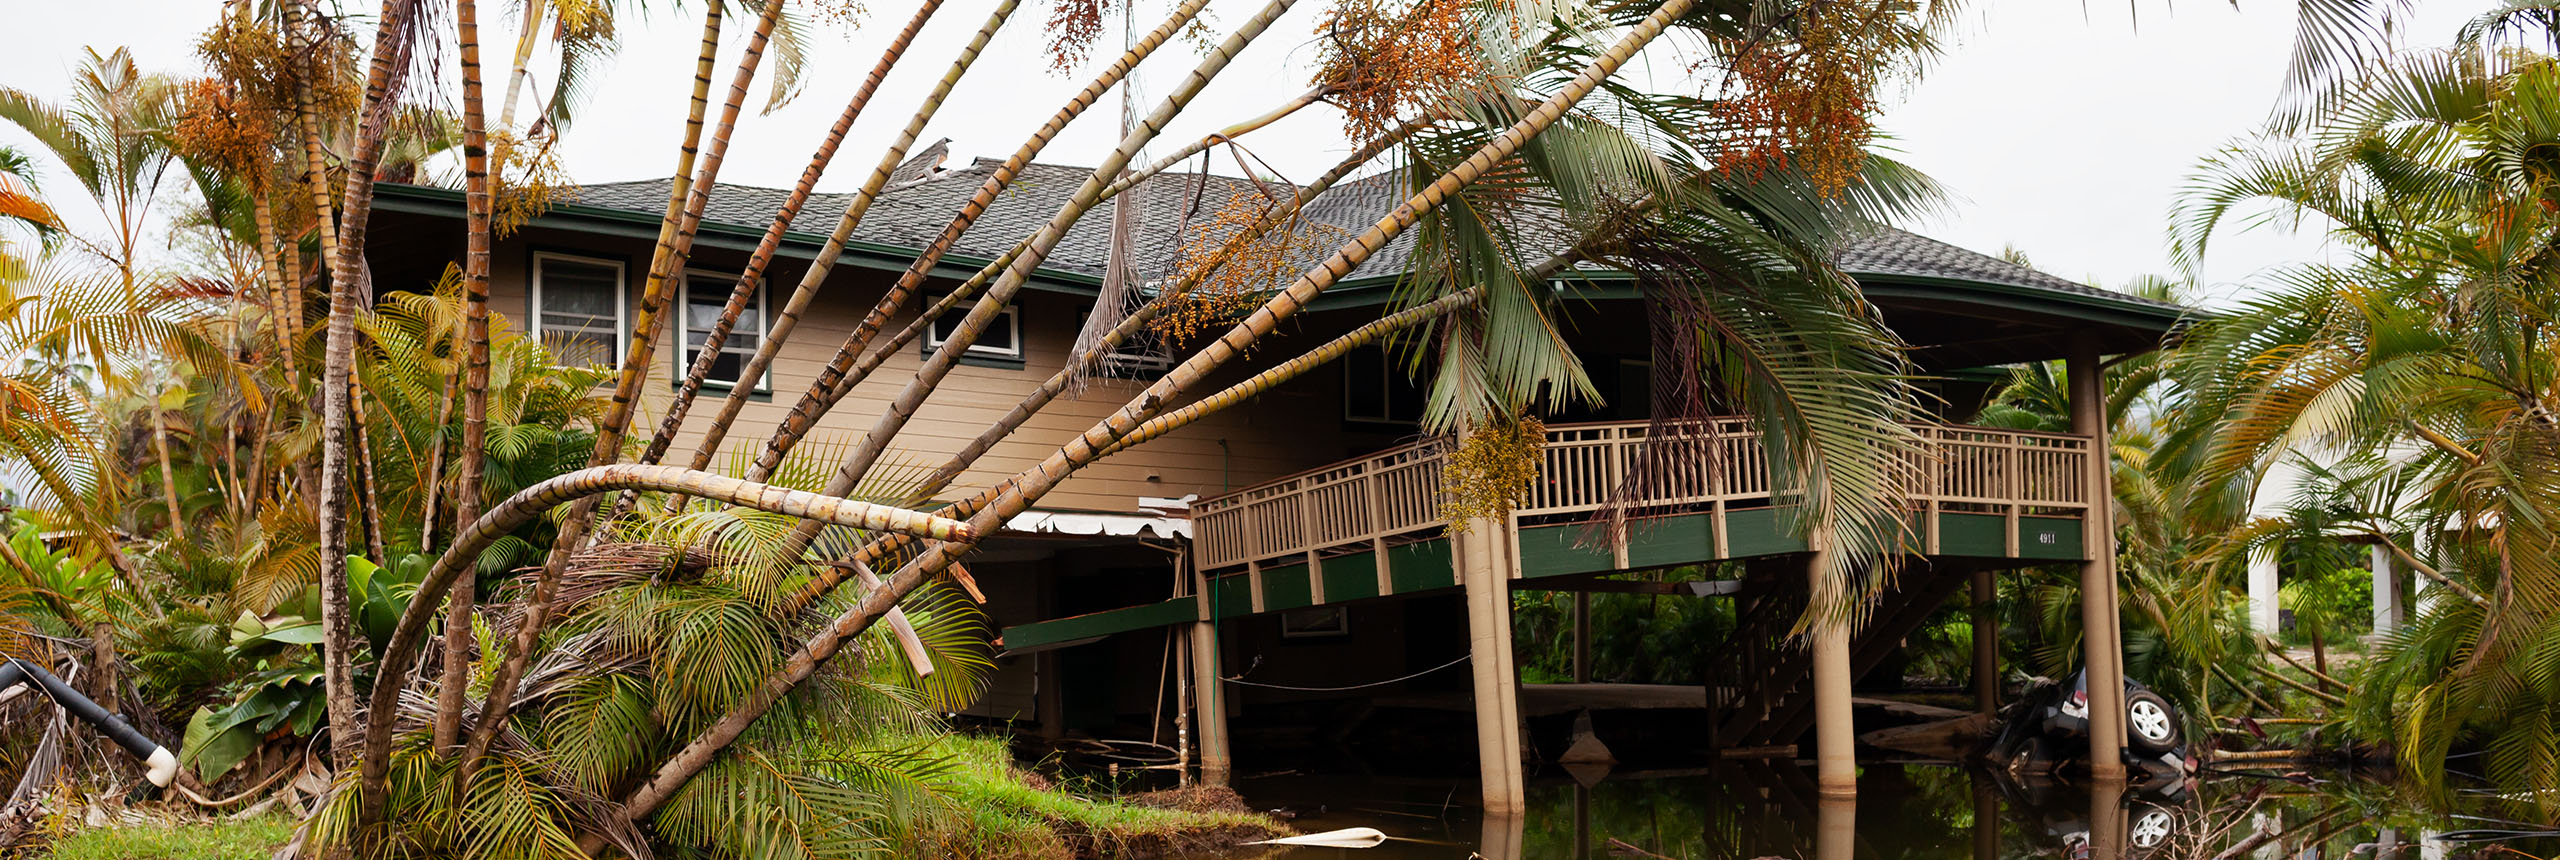 Residential water damage in Hawaii